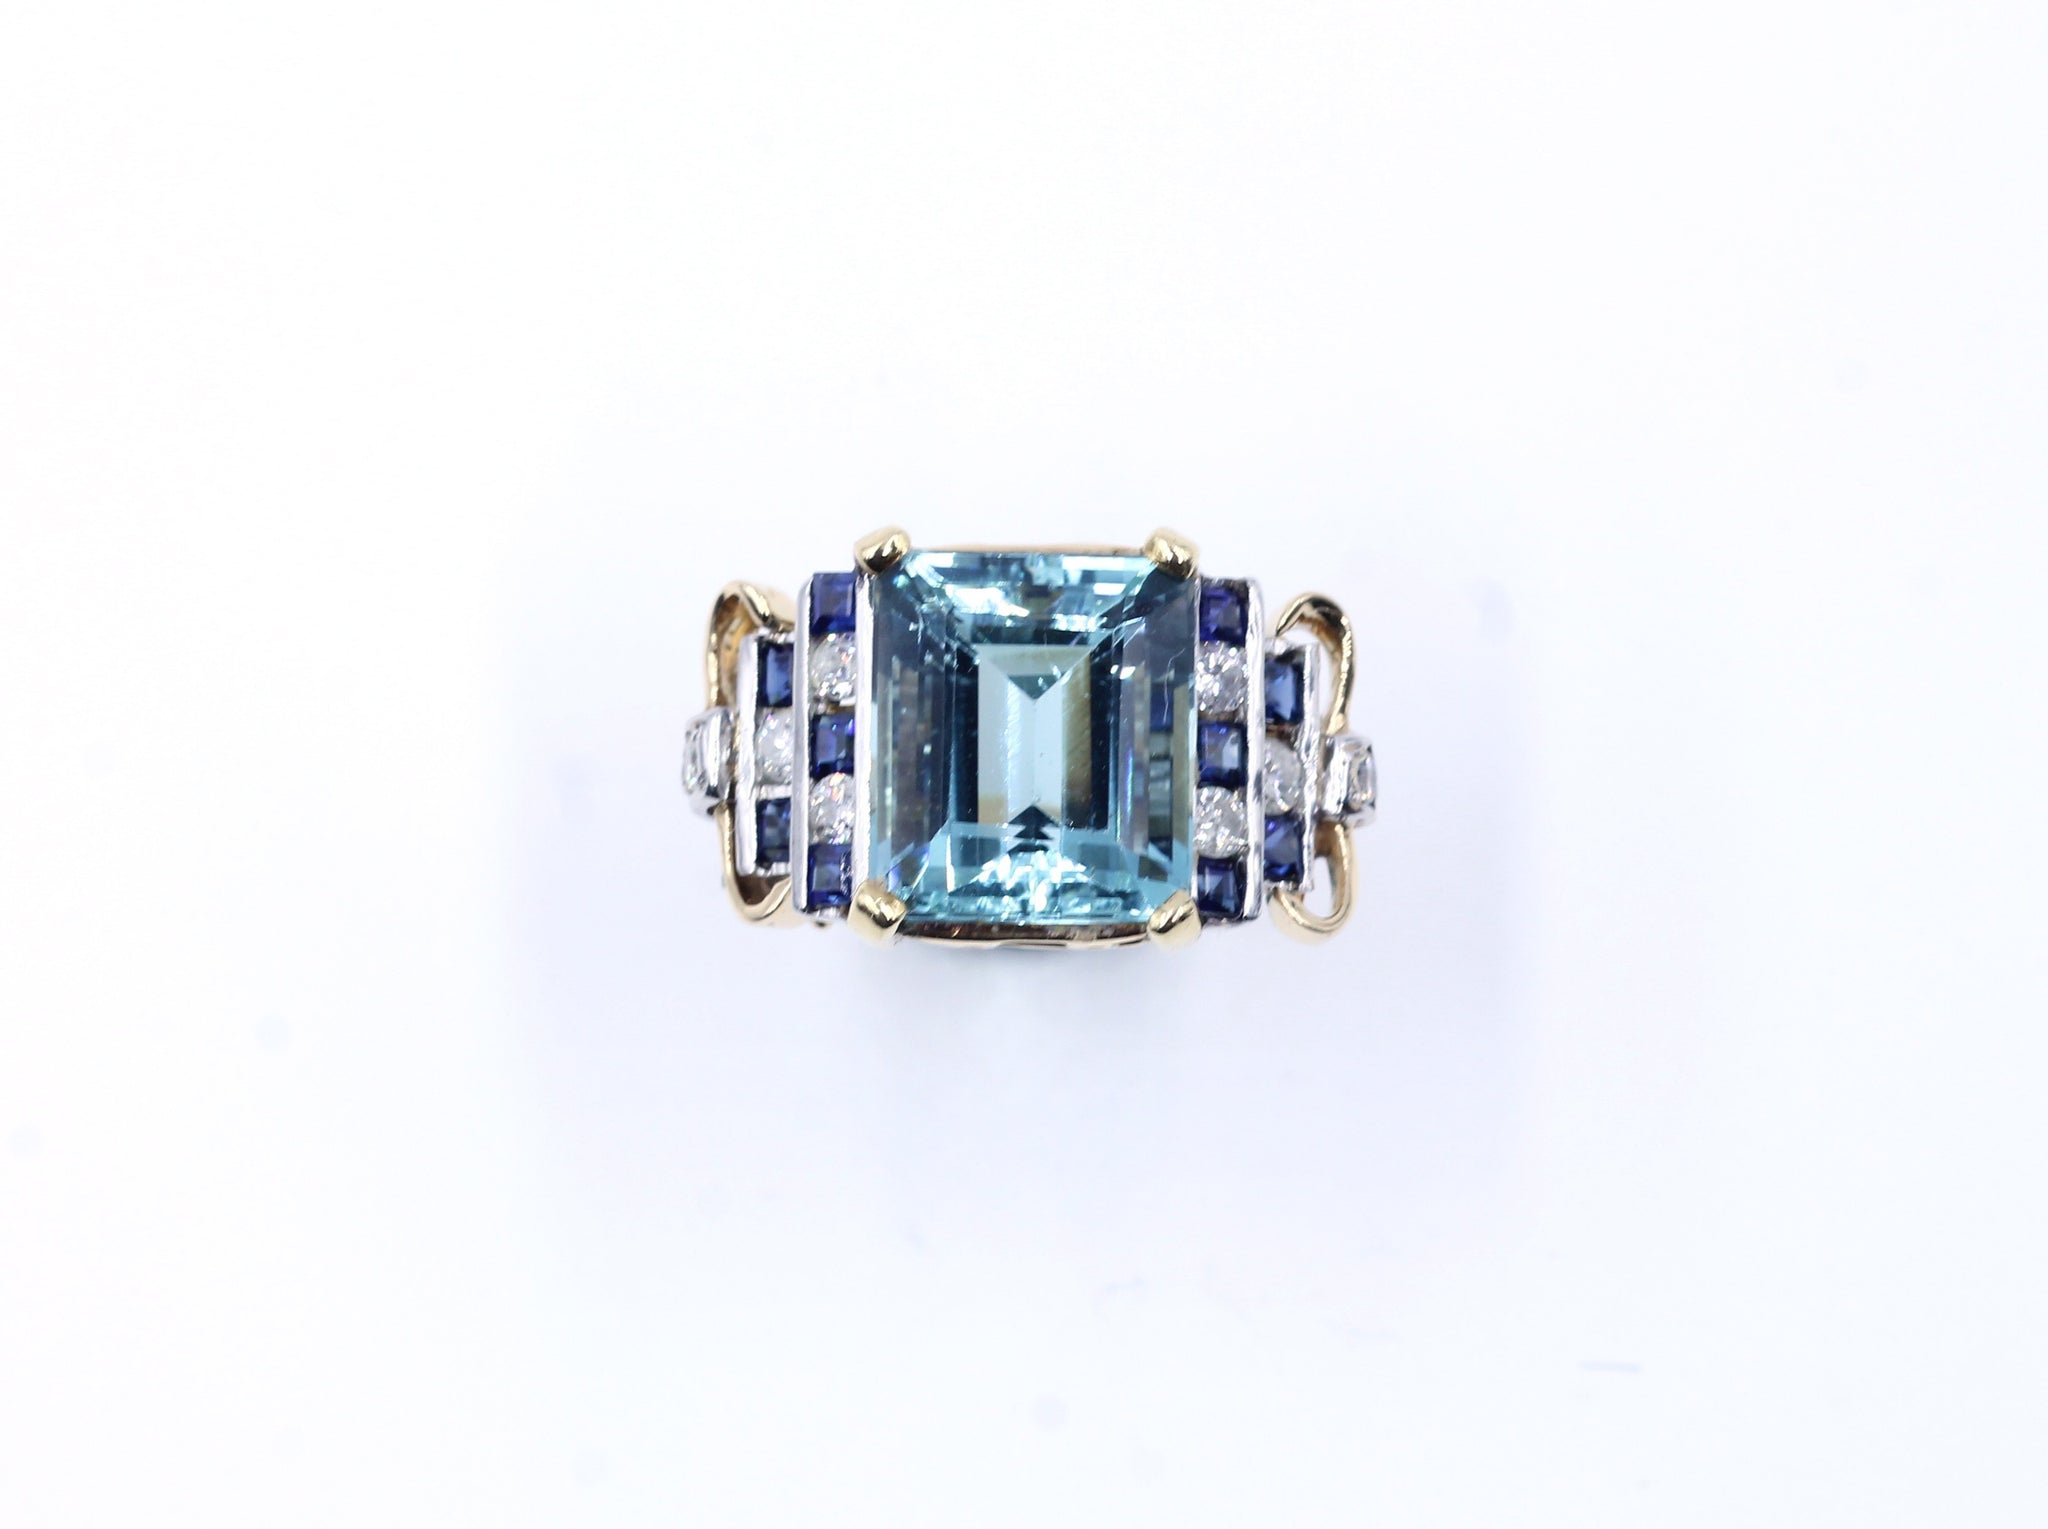 Vintage Aquamarine, Sapphire and Diamond Ring, SOLD